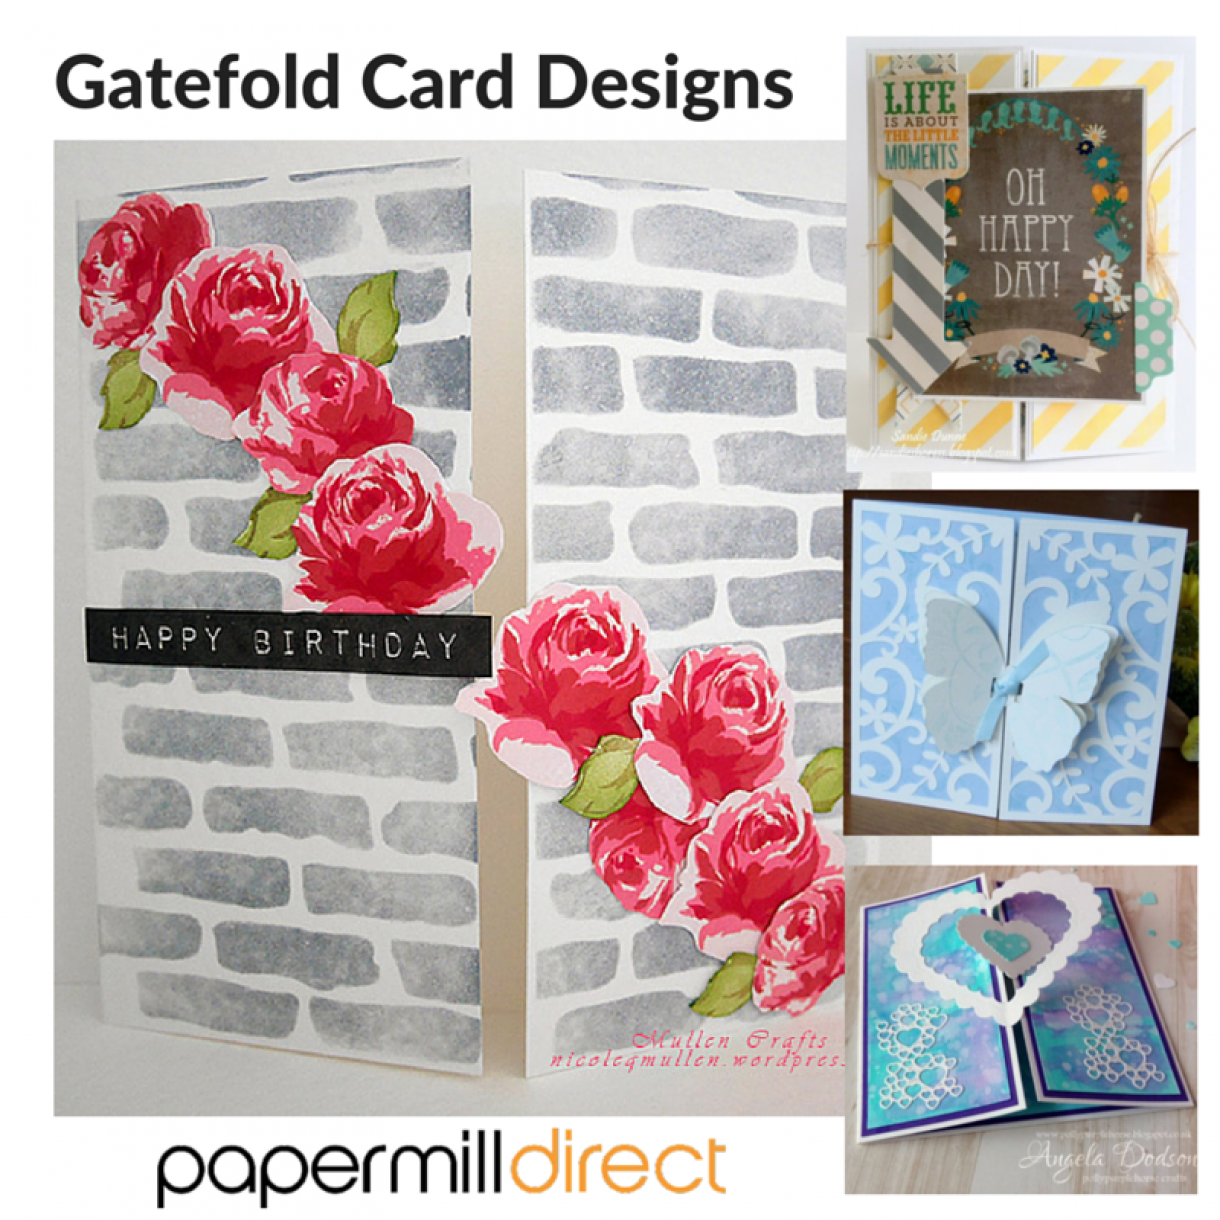 Gatefold Card Inspiration!